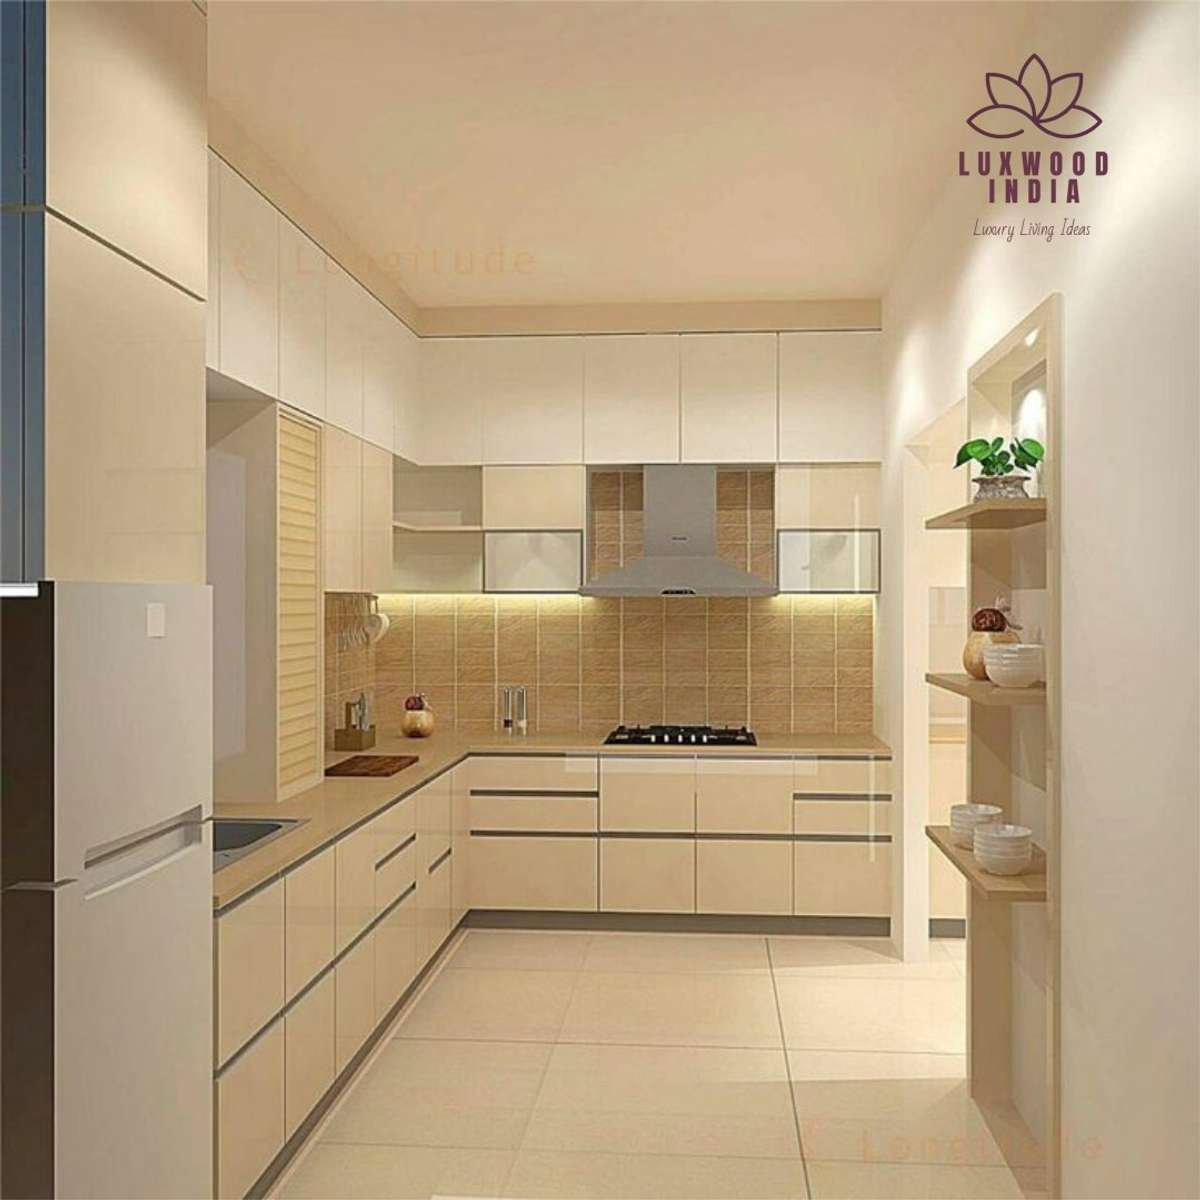 Exclusive Kitchen Design !!

Call/Whatsapp @8780515459

 #InteriorDesigner #LivingroomDesigns #SmallHouse #space_saving #exclusivedesign #gurgaon #noidainterior #noida #delhiarchitects #Delhihome #turnkeysolutions #DelhiGhaziabadNoida #budget_home_simple_interi #budget #sober #mumbaiinteriors #banglore #LivingRoomDecoration #DecorIdeas #KitchenInterior #ModularKitchen #KitchenDesigns